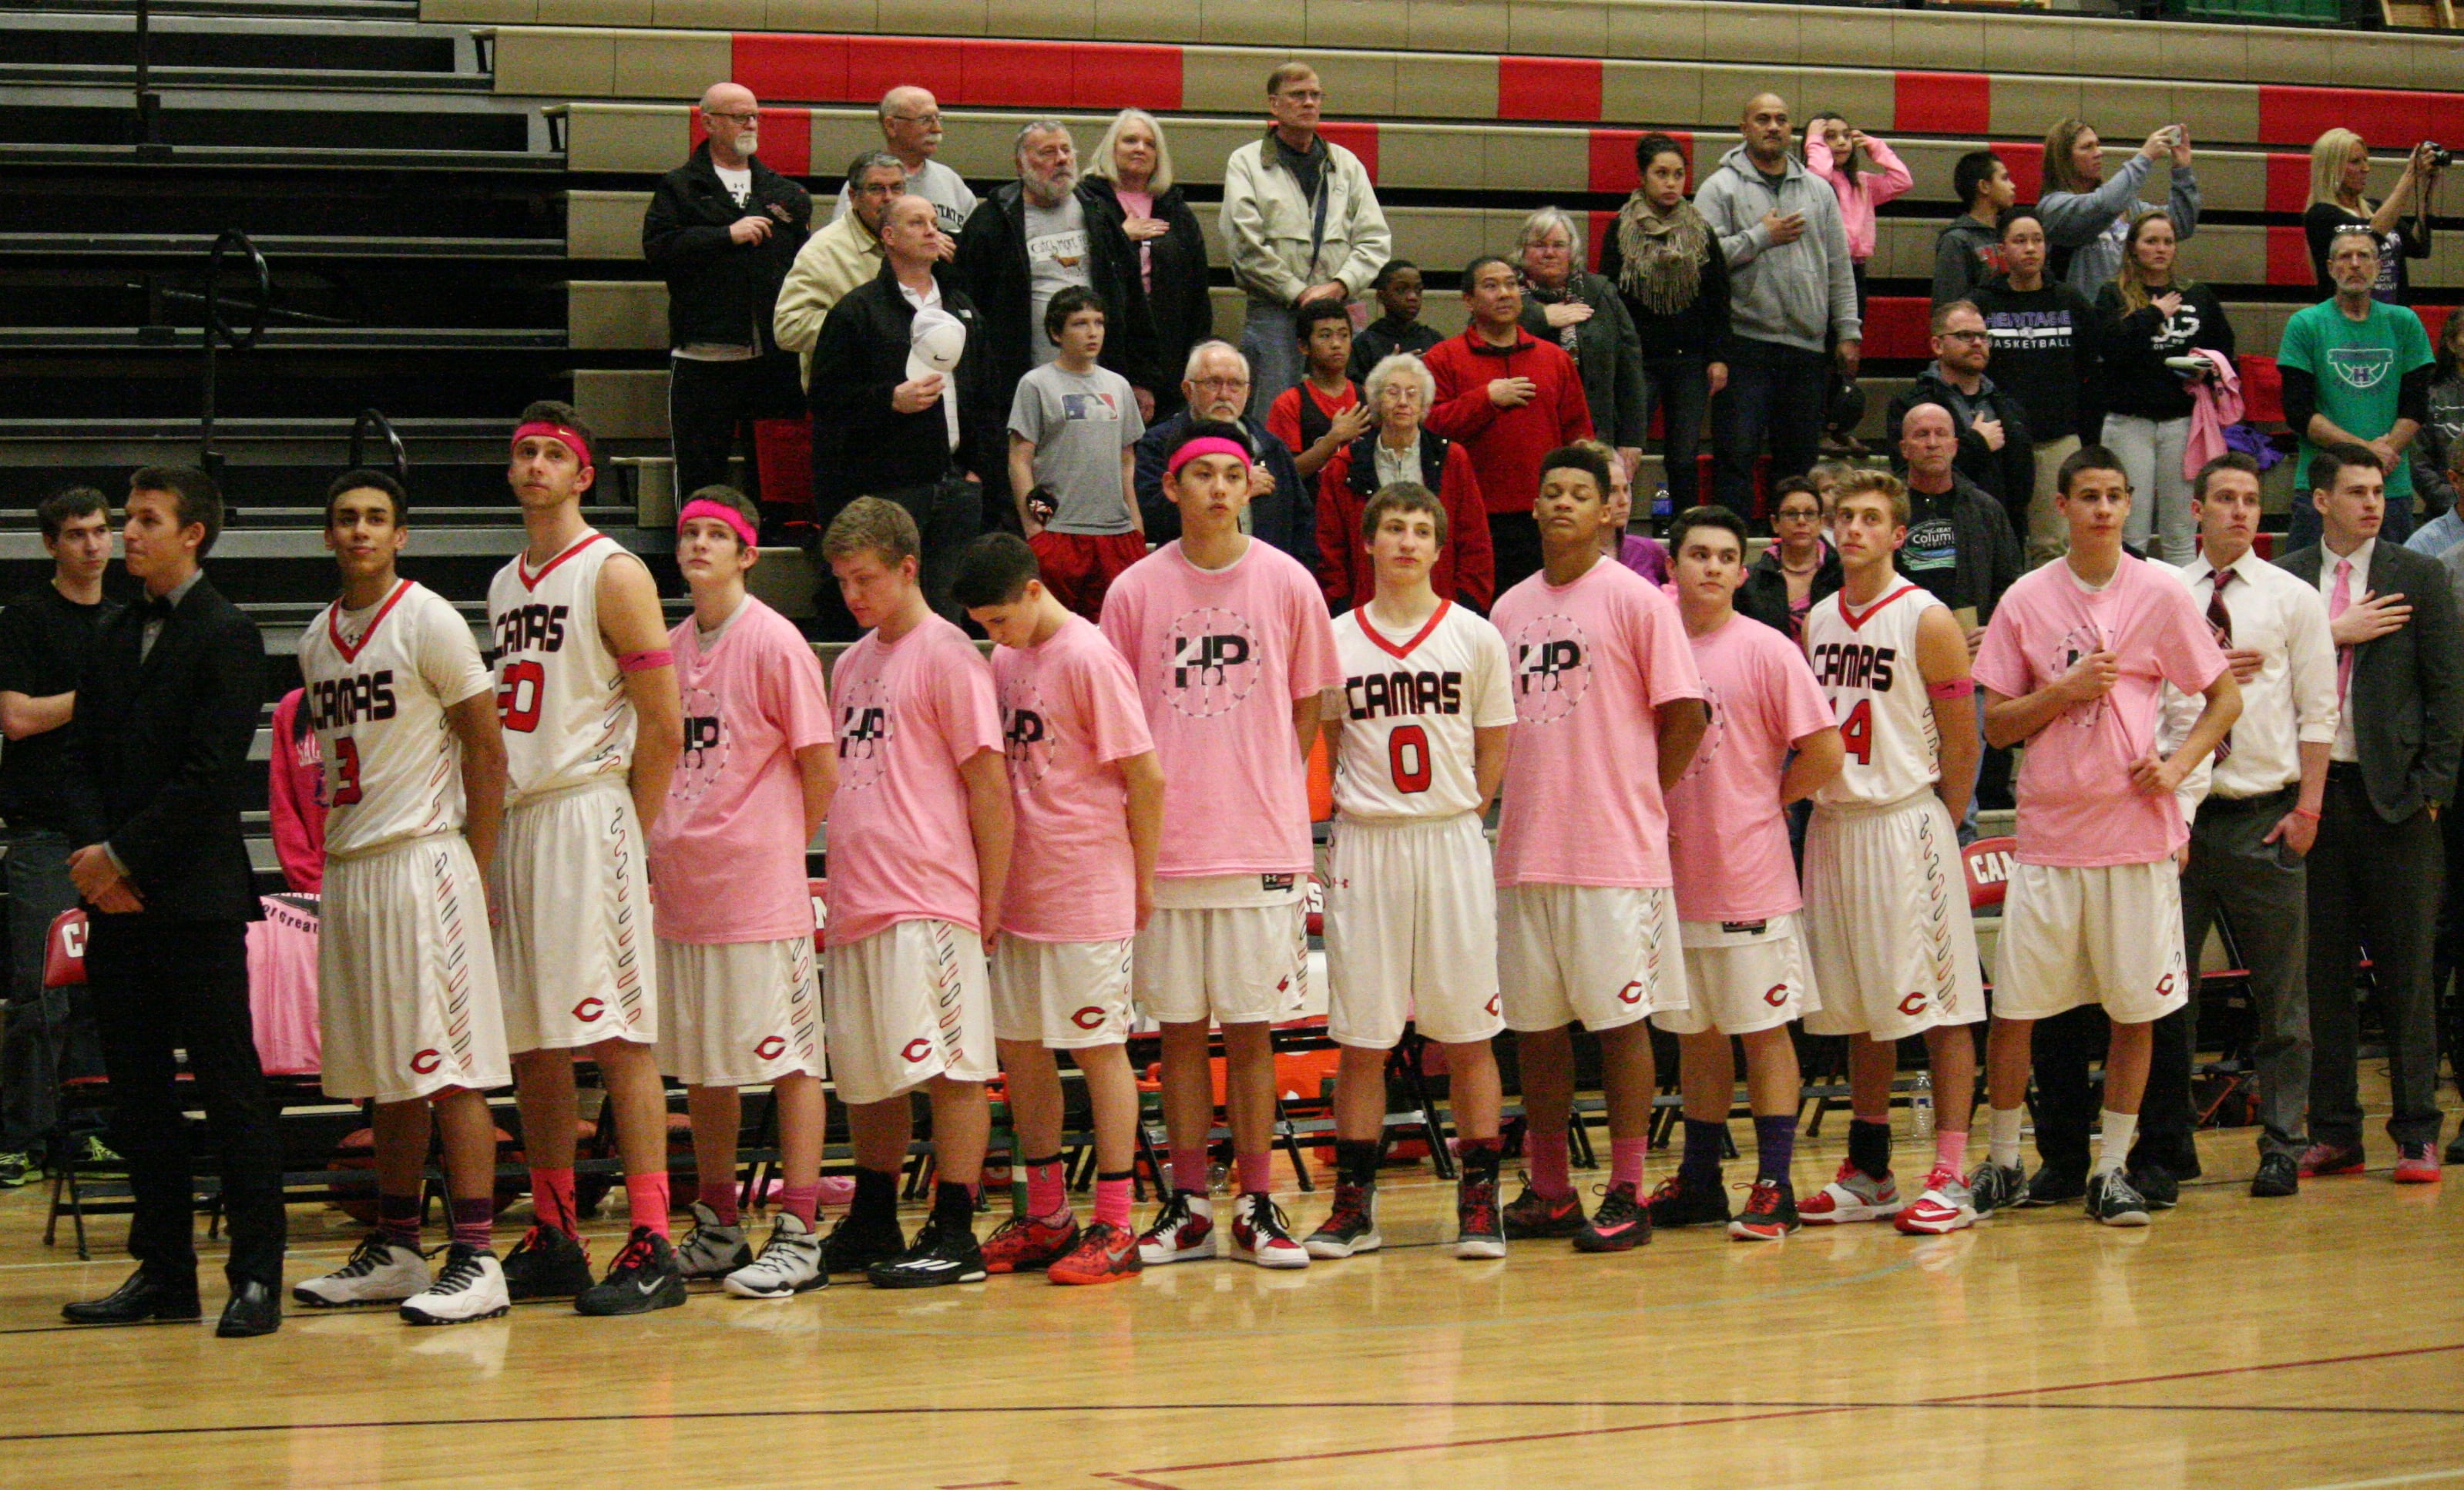 The Camas High School boys basketball team during National Anthem.